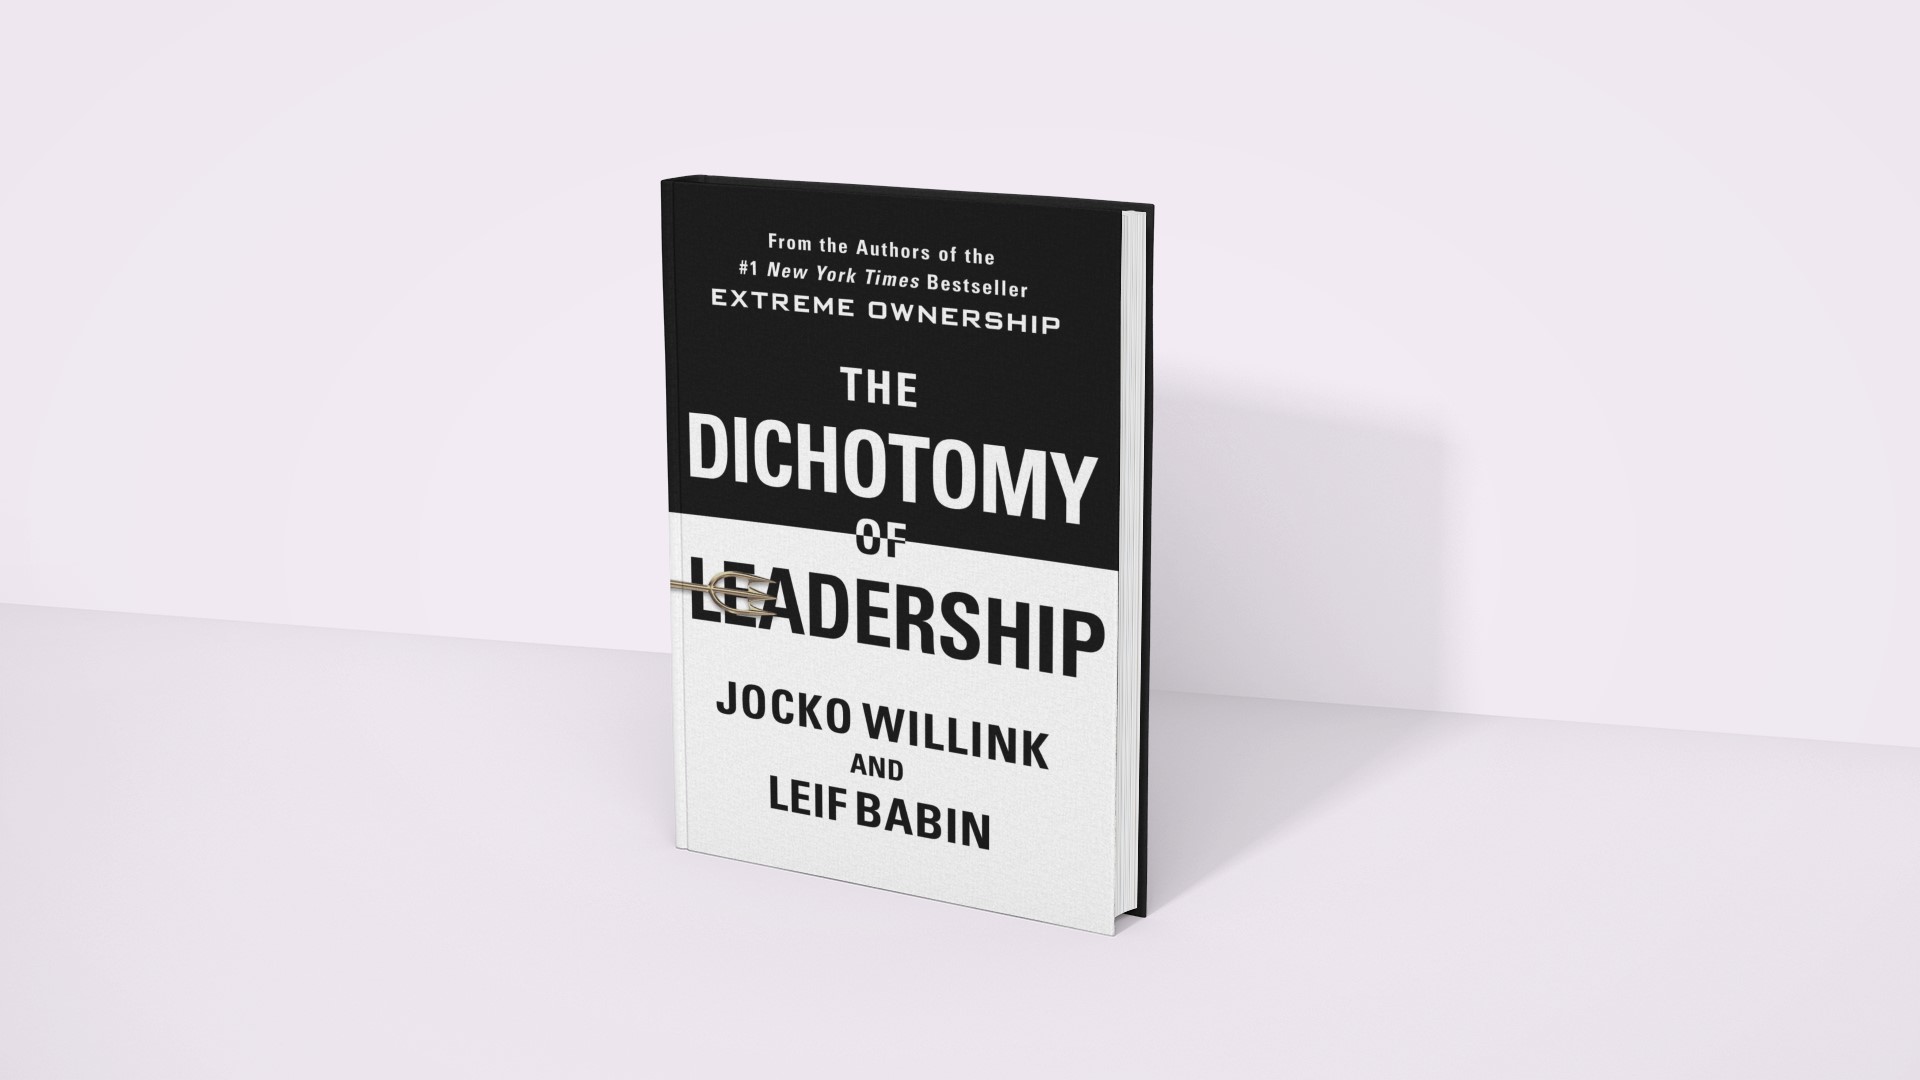 The Dichotomy of Leadership - Jocko Willink & Leif Babin